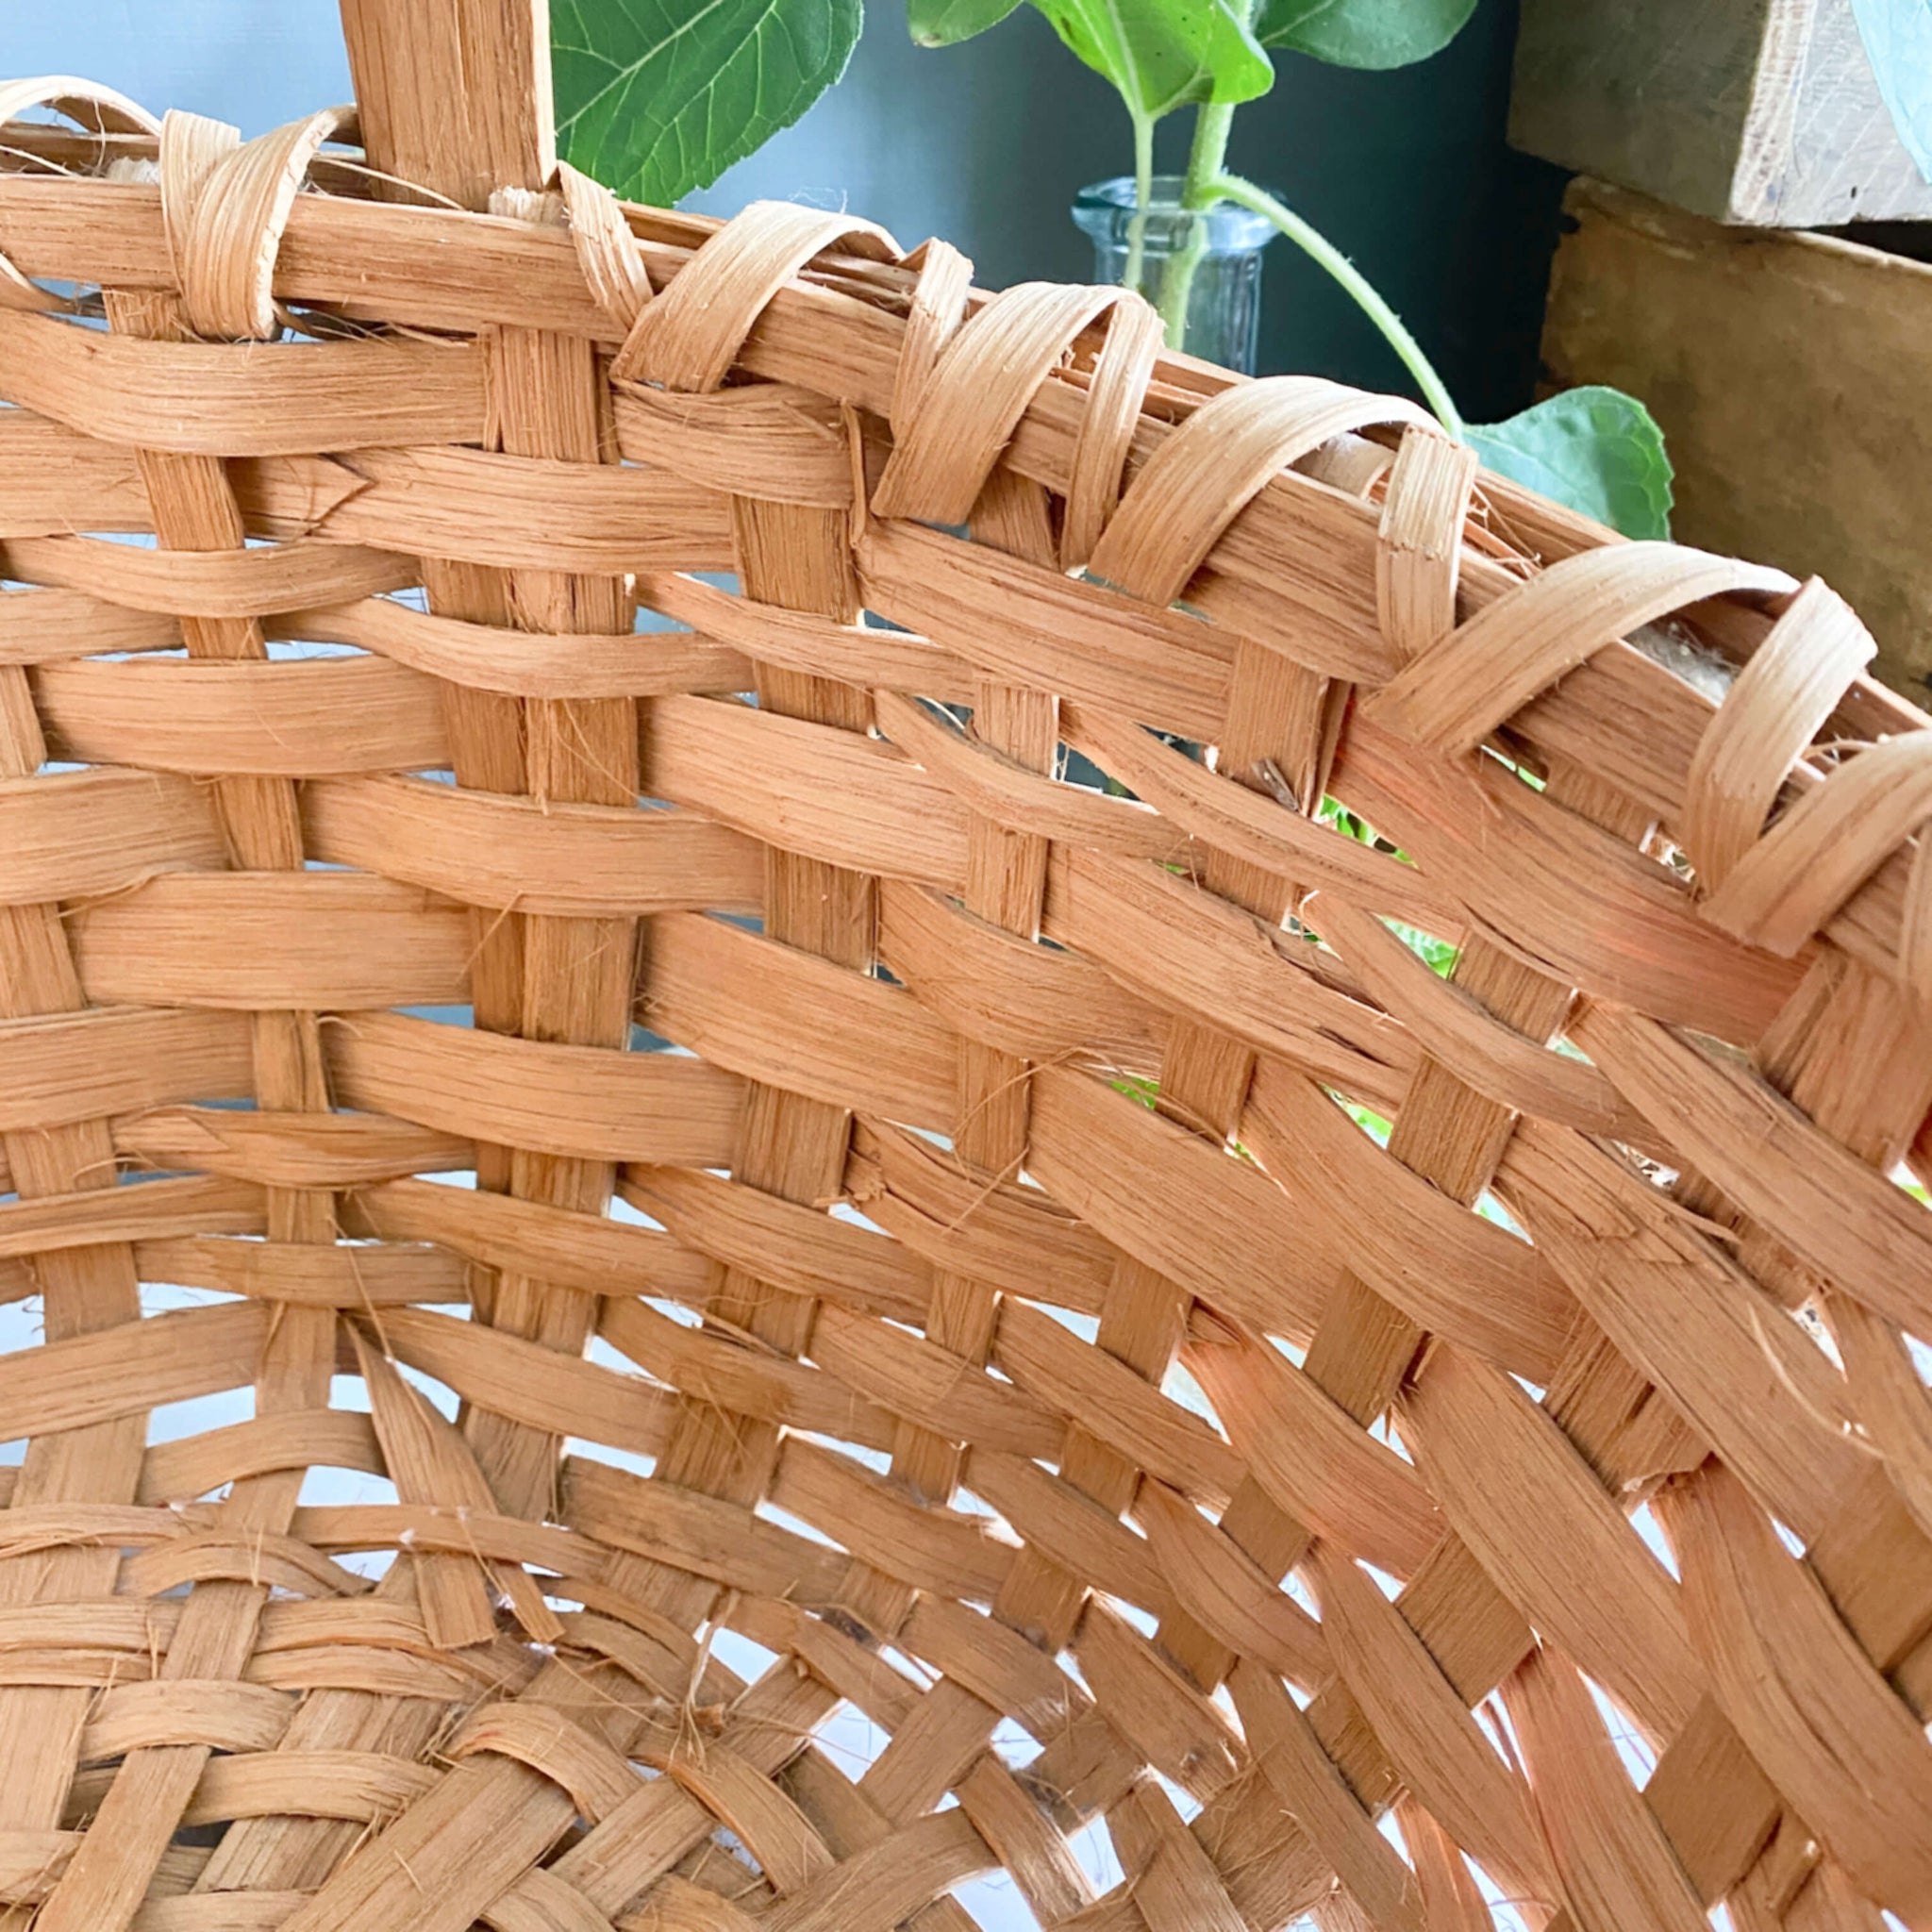 Handmade Split-Oak Gathering Basket 18x14